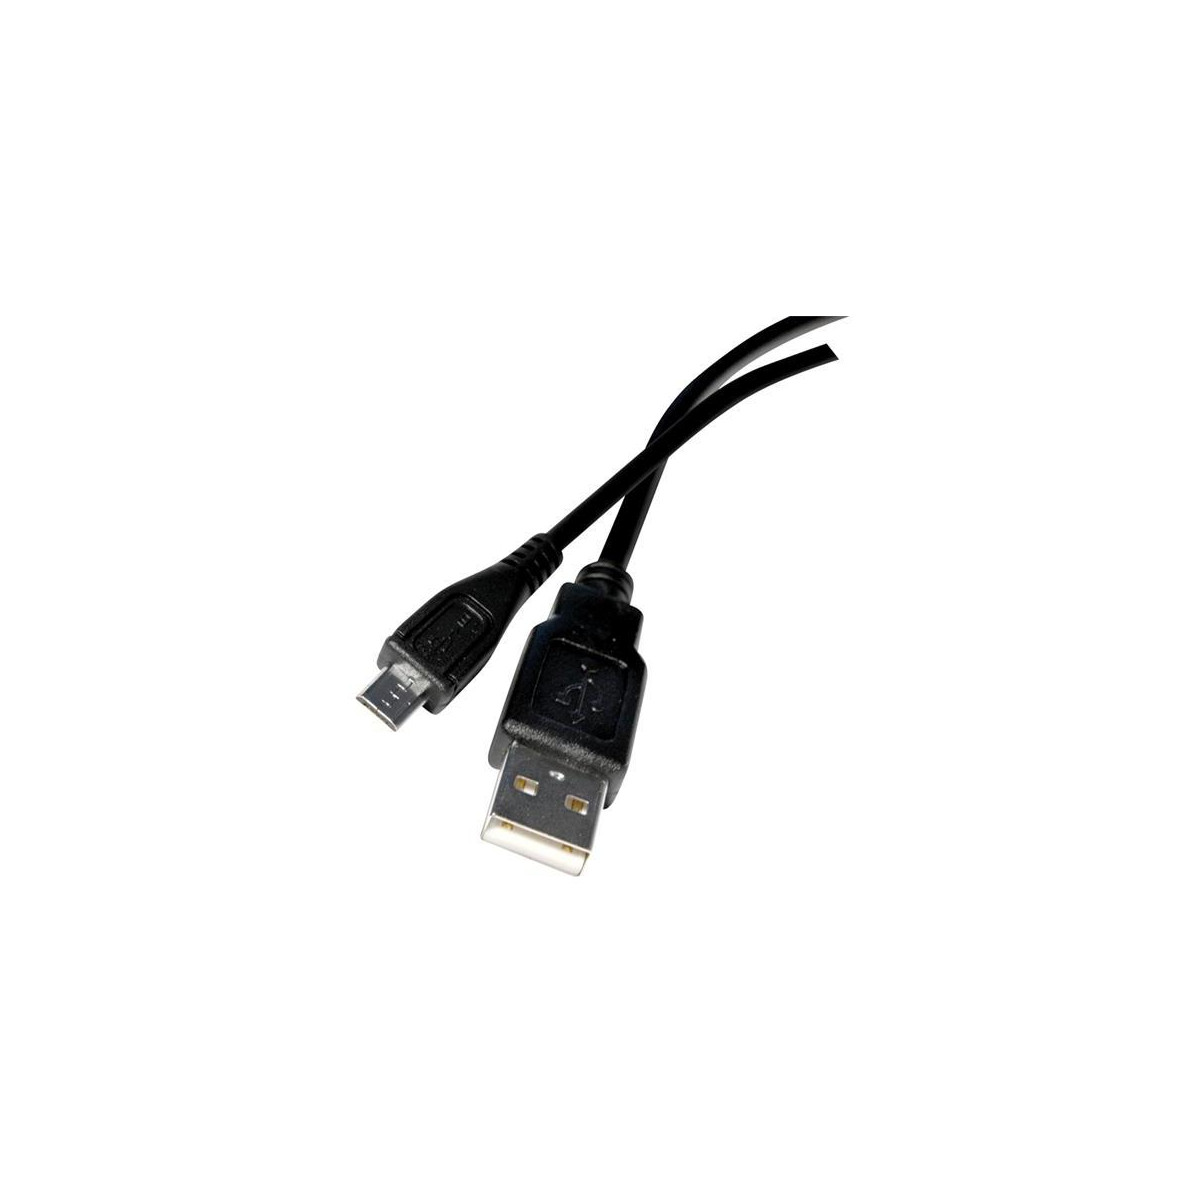 More about Kabel TIPA USB 2.0 A/Micro USB 1,8m černý